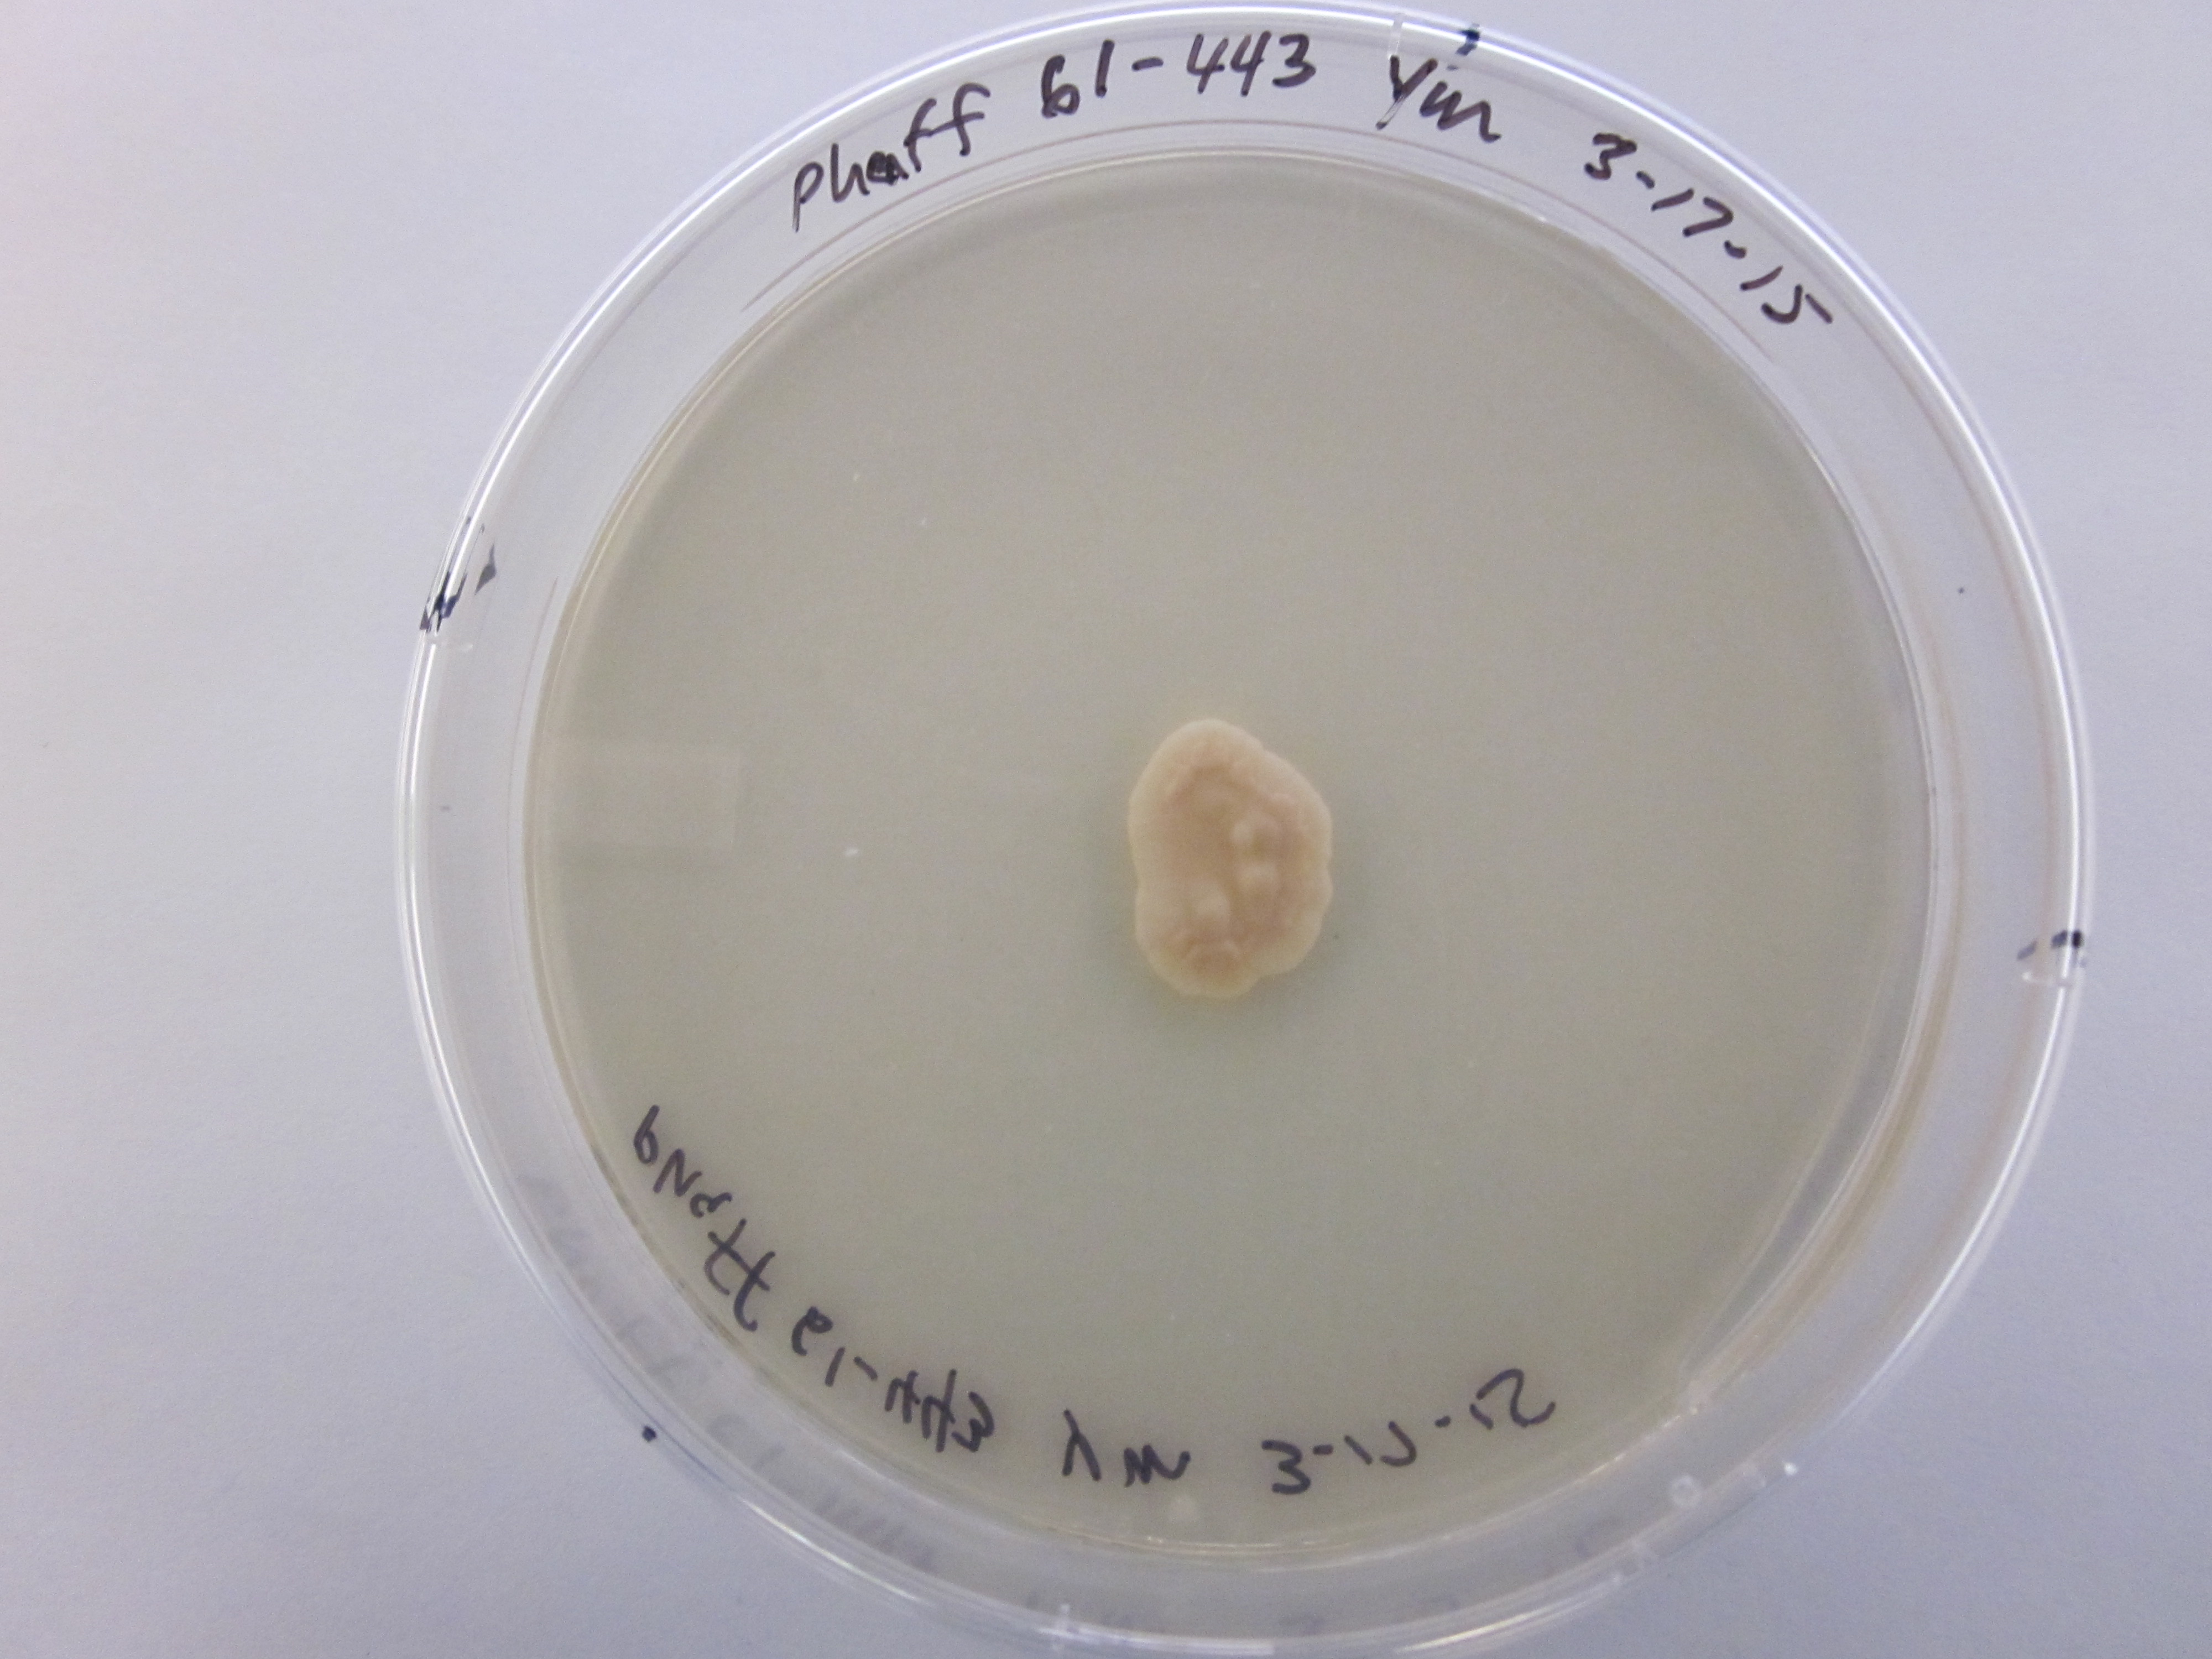 Photo of Cryptococcus terreus 61-443 v1.0